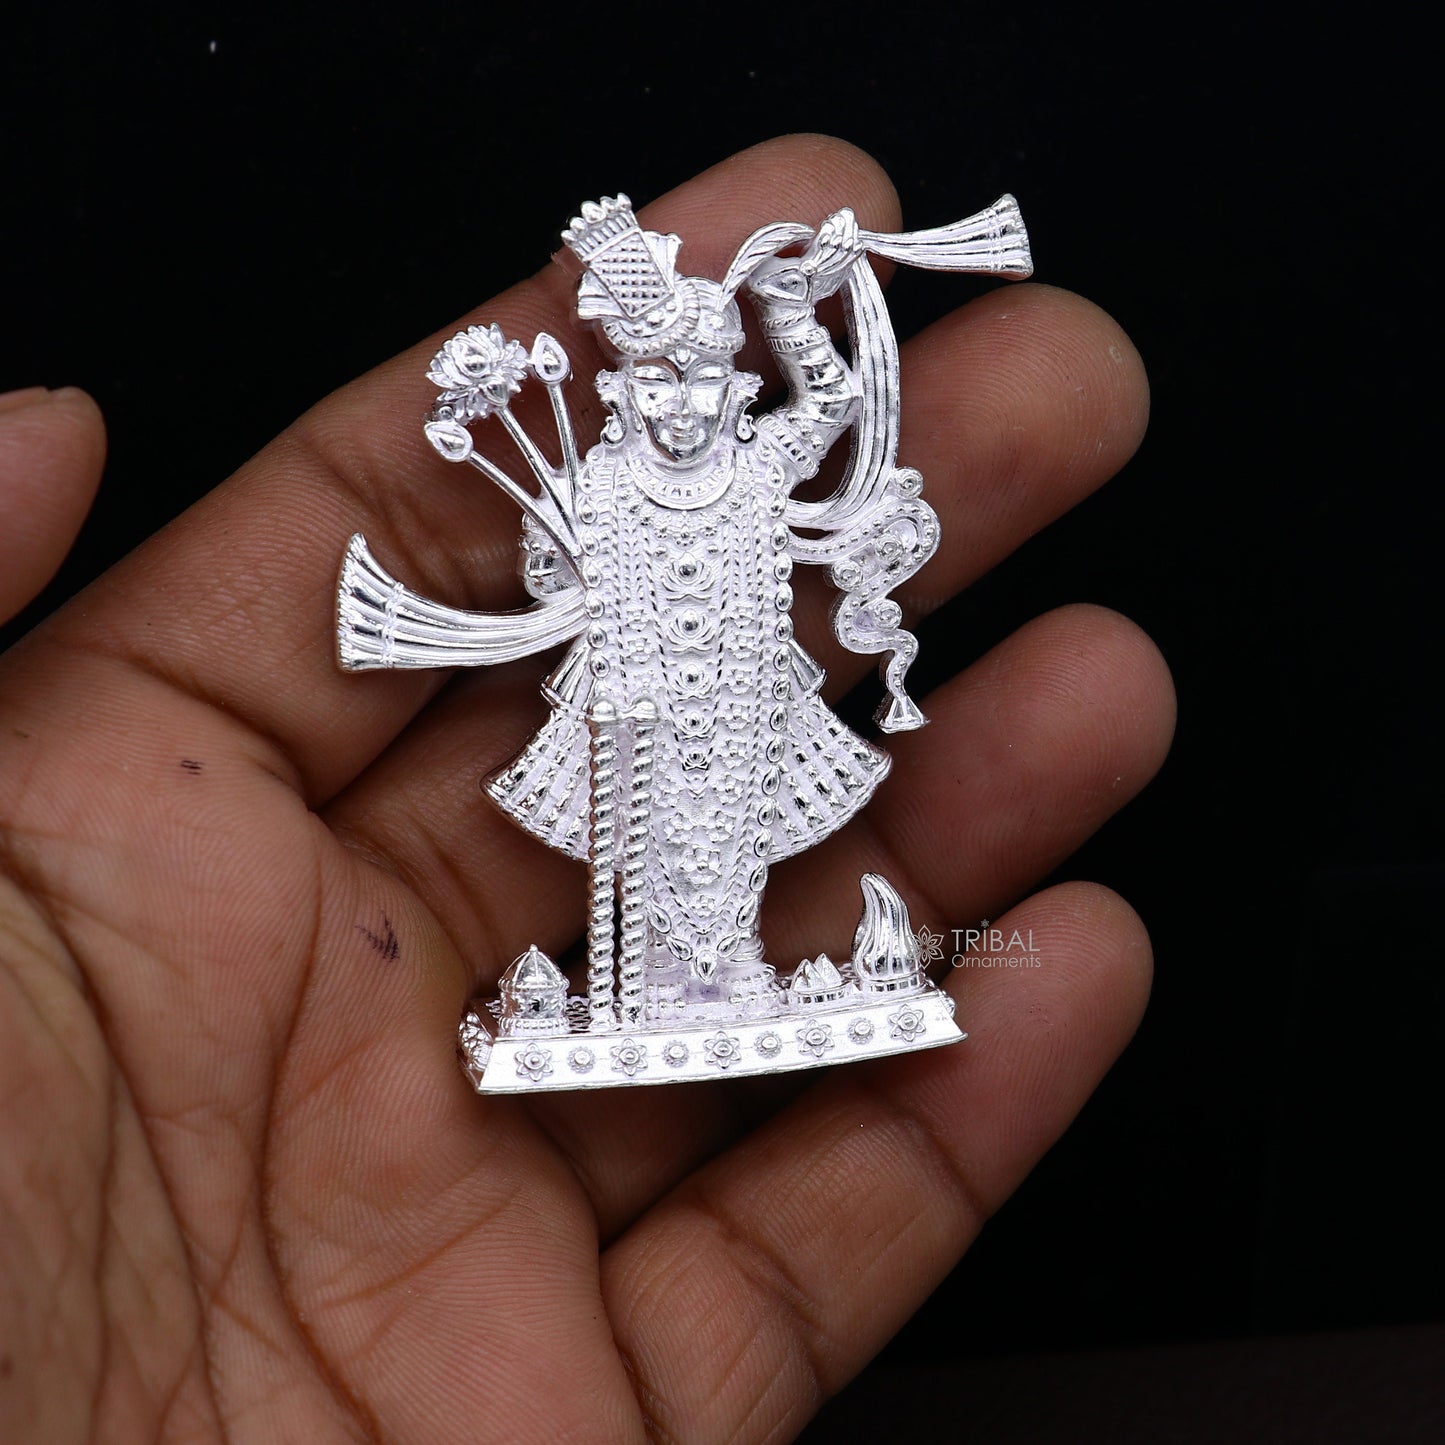 2.5"  925 Sterling silver handmade design Idols Lord Krishna  Shrinathji statue figurine, puja articles decorative gift diwali puja art634 - TRIBAL ORNAMENTS